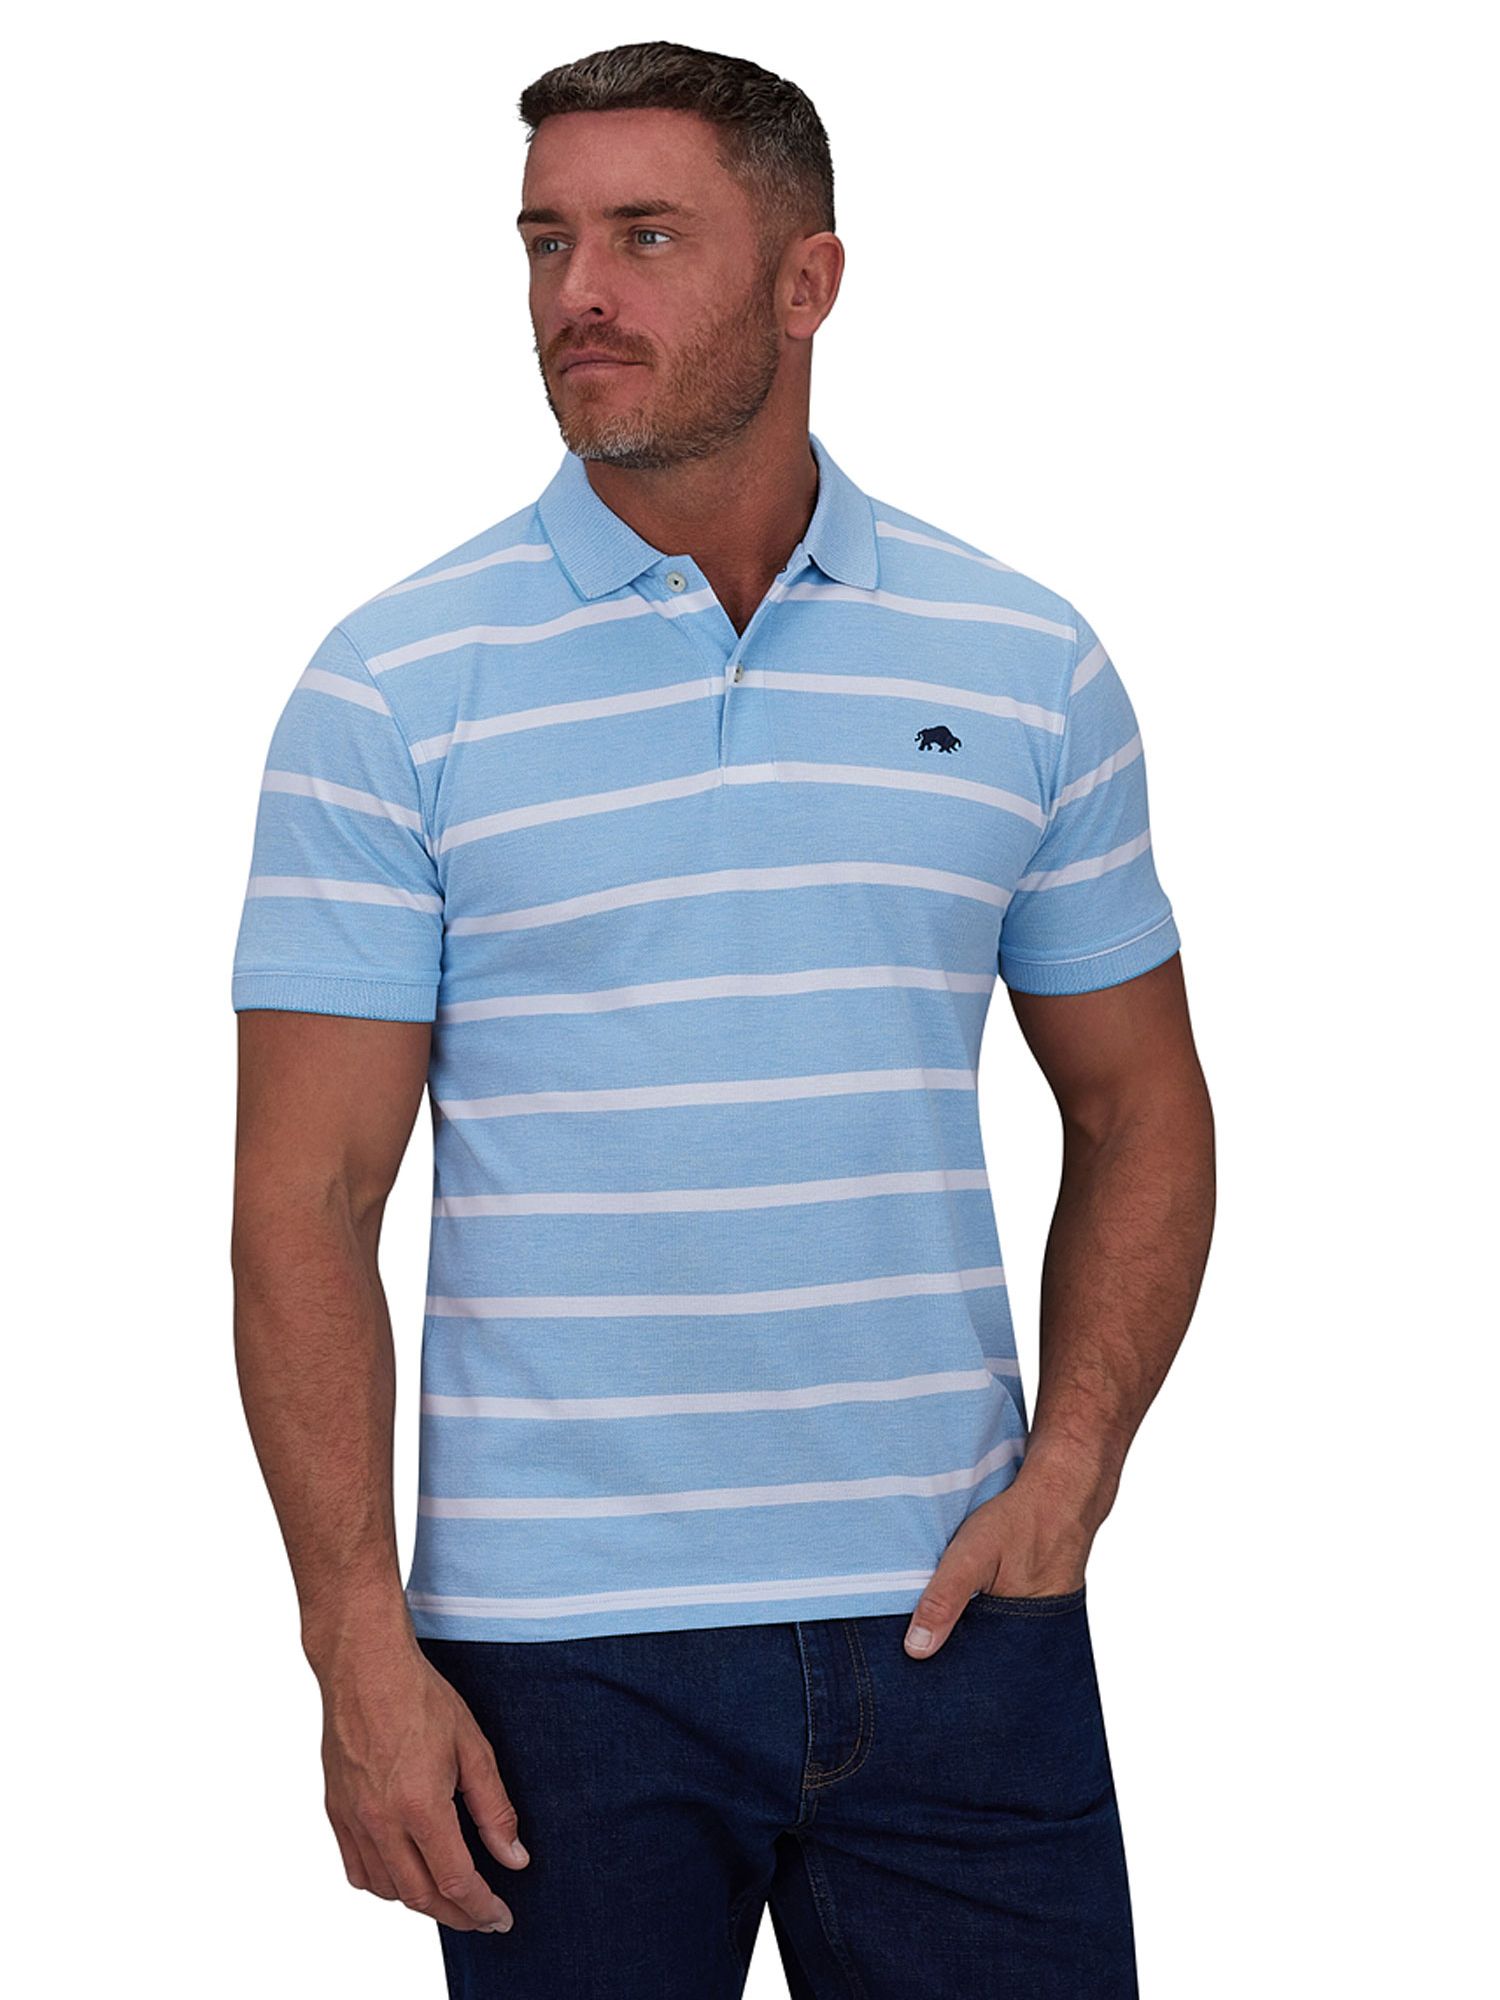 Raging Bull Birdseye Stripe Polo Shirt, Mid Blue, S